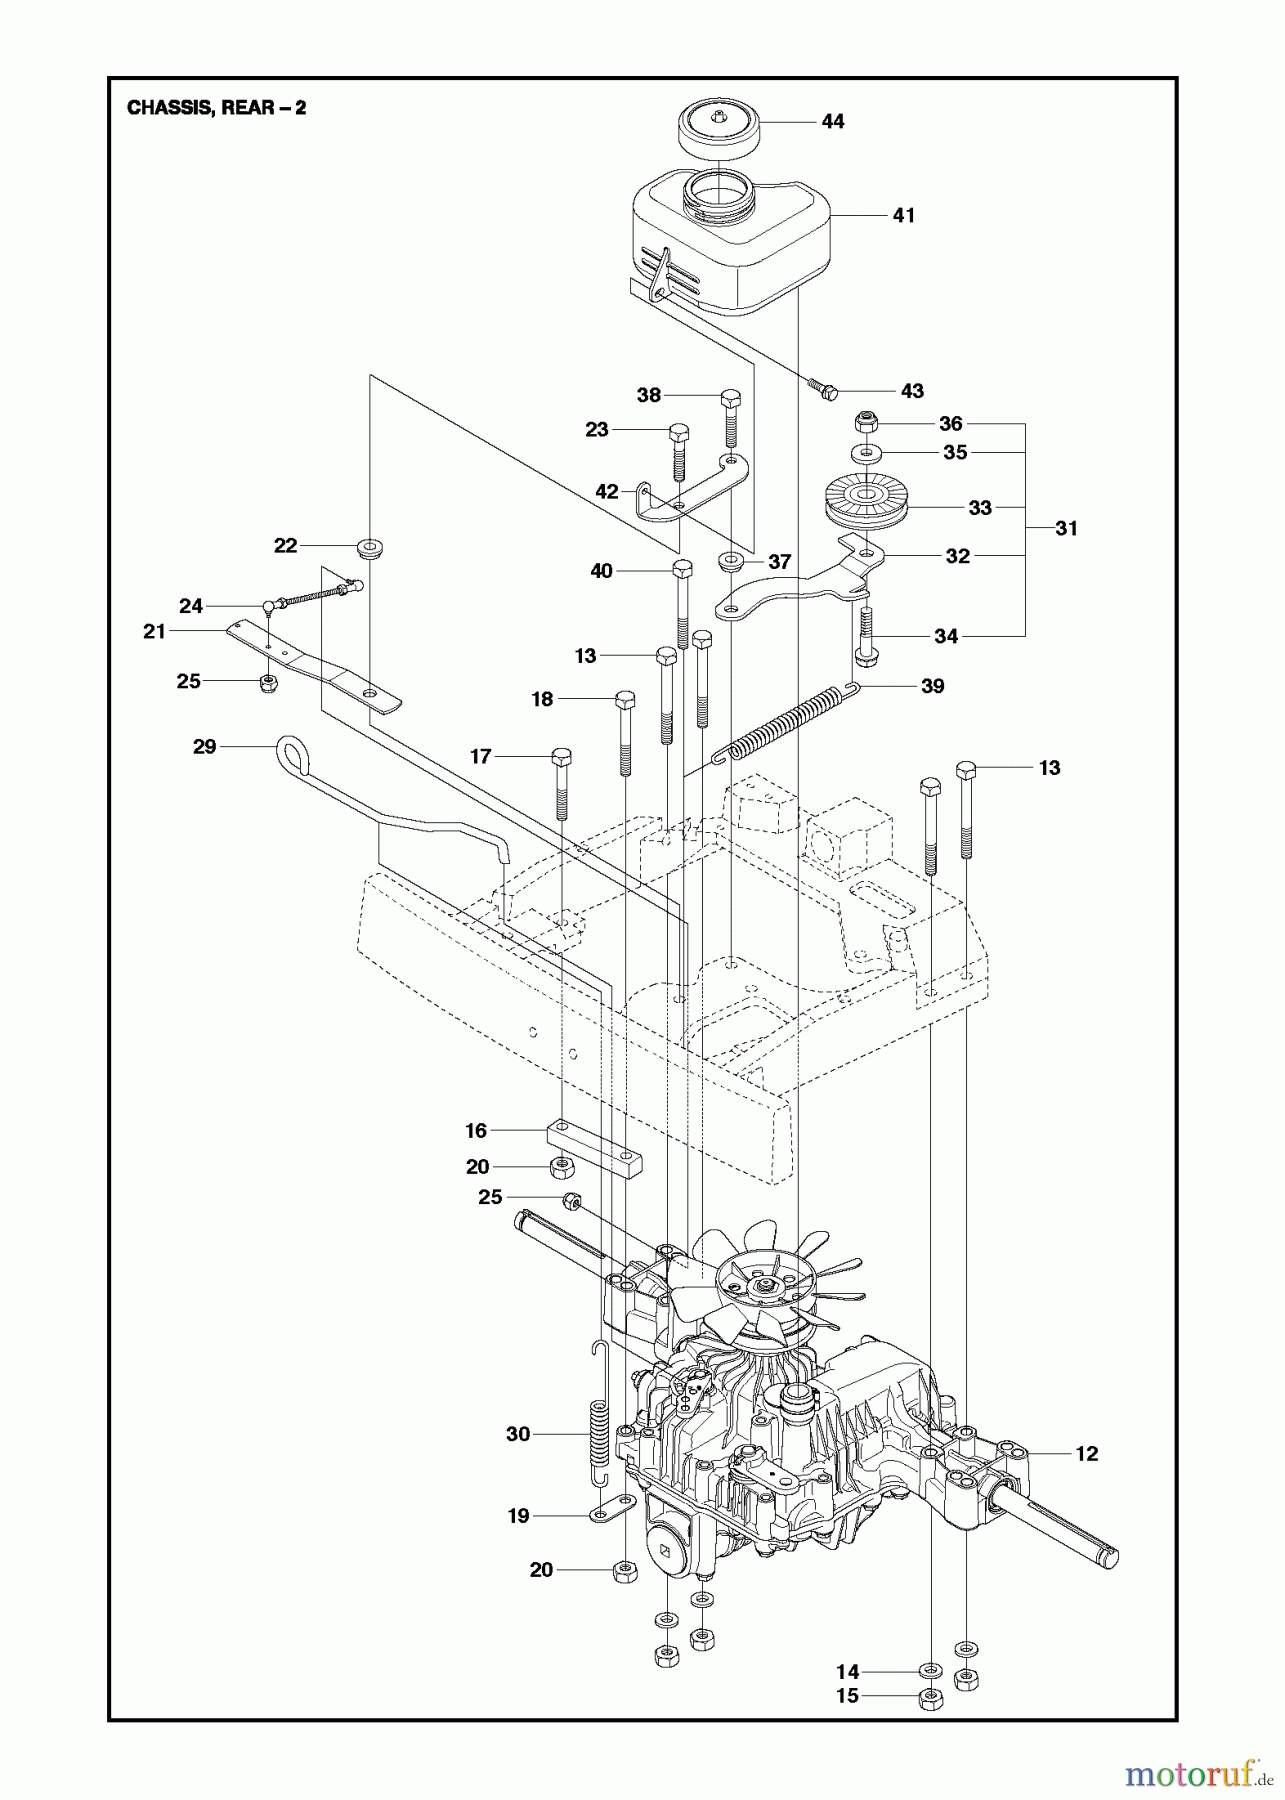  Jonsered Reitermäher FR2218 FA 4x4 (966773701) - Jonsered Rear-Engine Riding Mower (2013) CHASSIS REAR #1